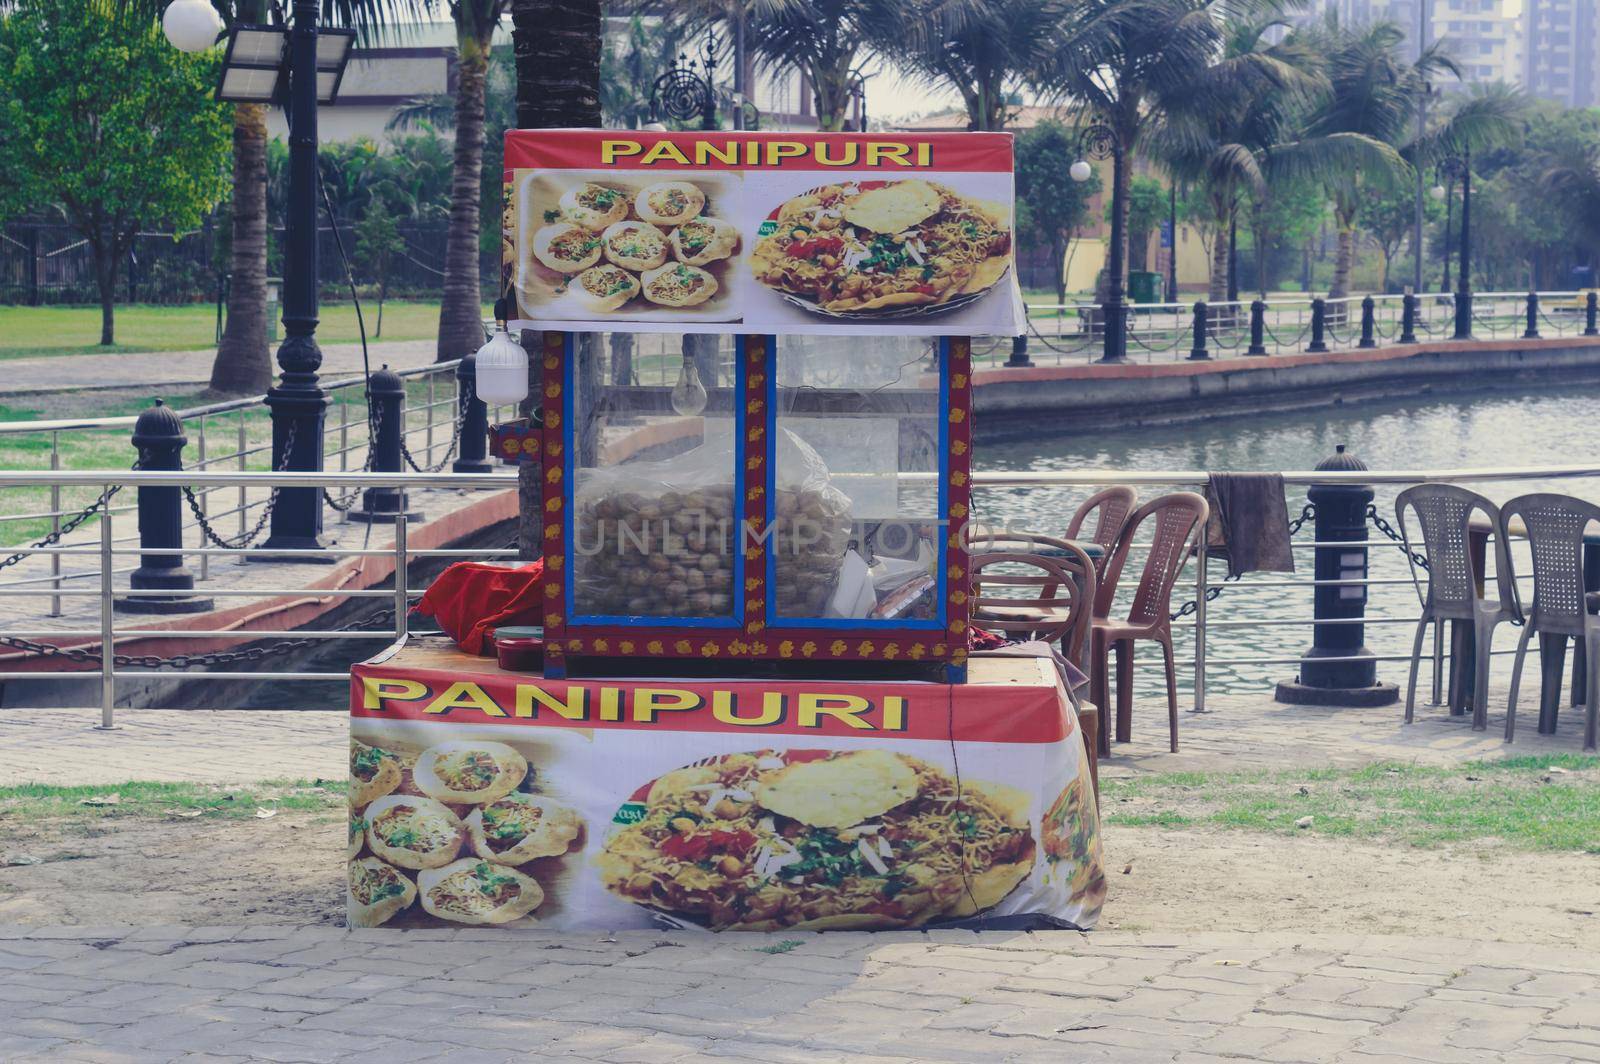 A Pani Puri or golgappa street food stall inside Eco tourism park Kolkata India South Asia March 22, 2022 by sudiptabhowmick